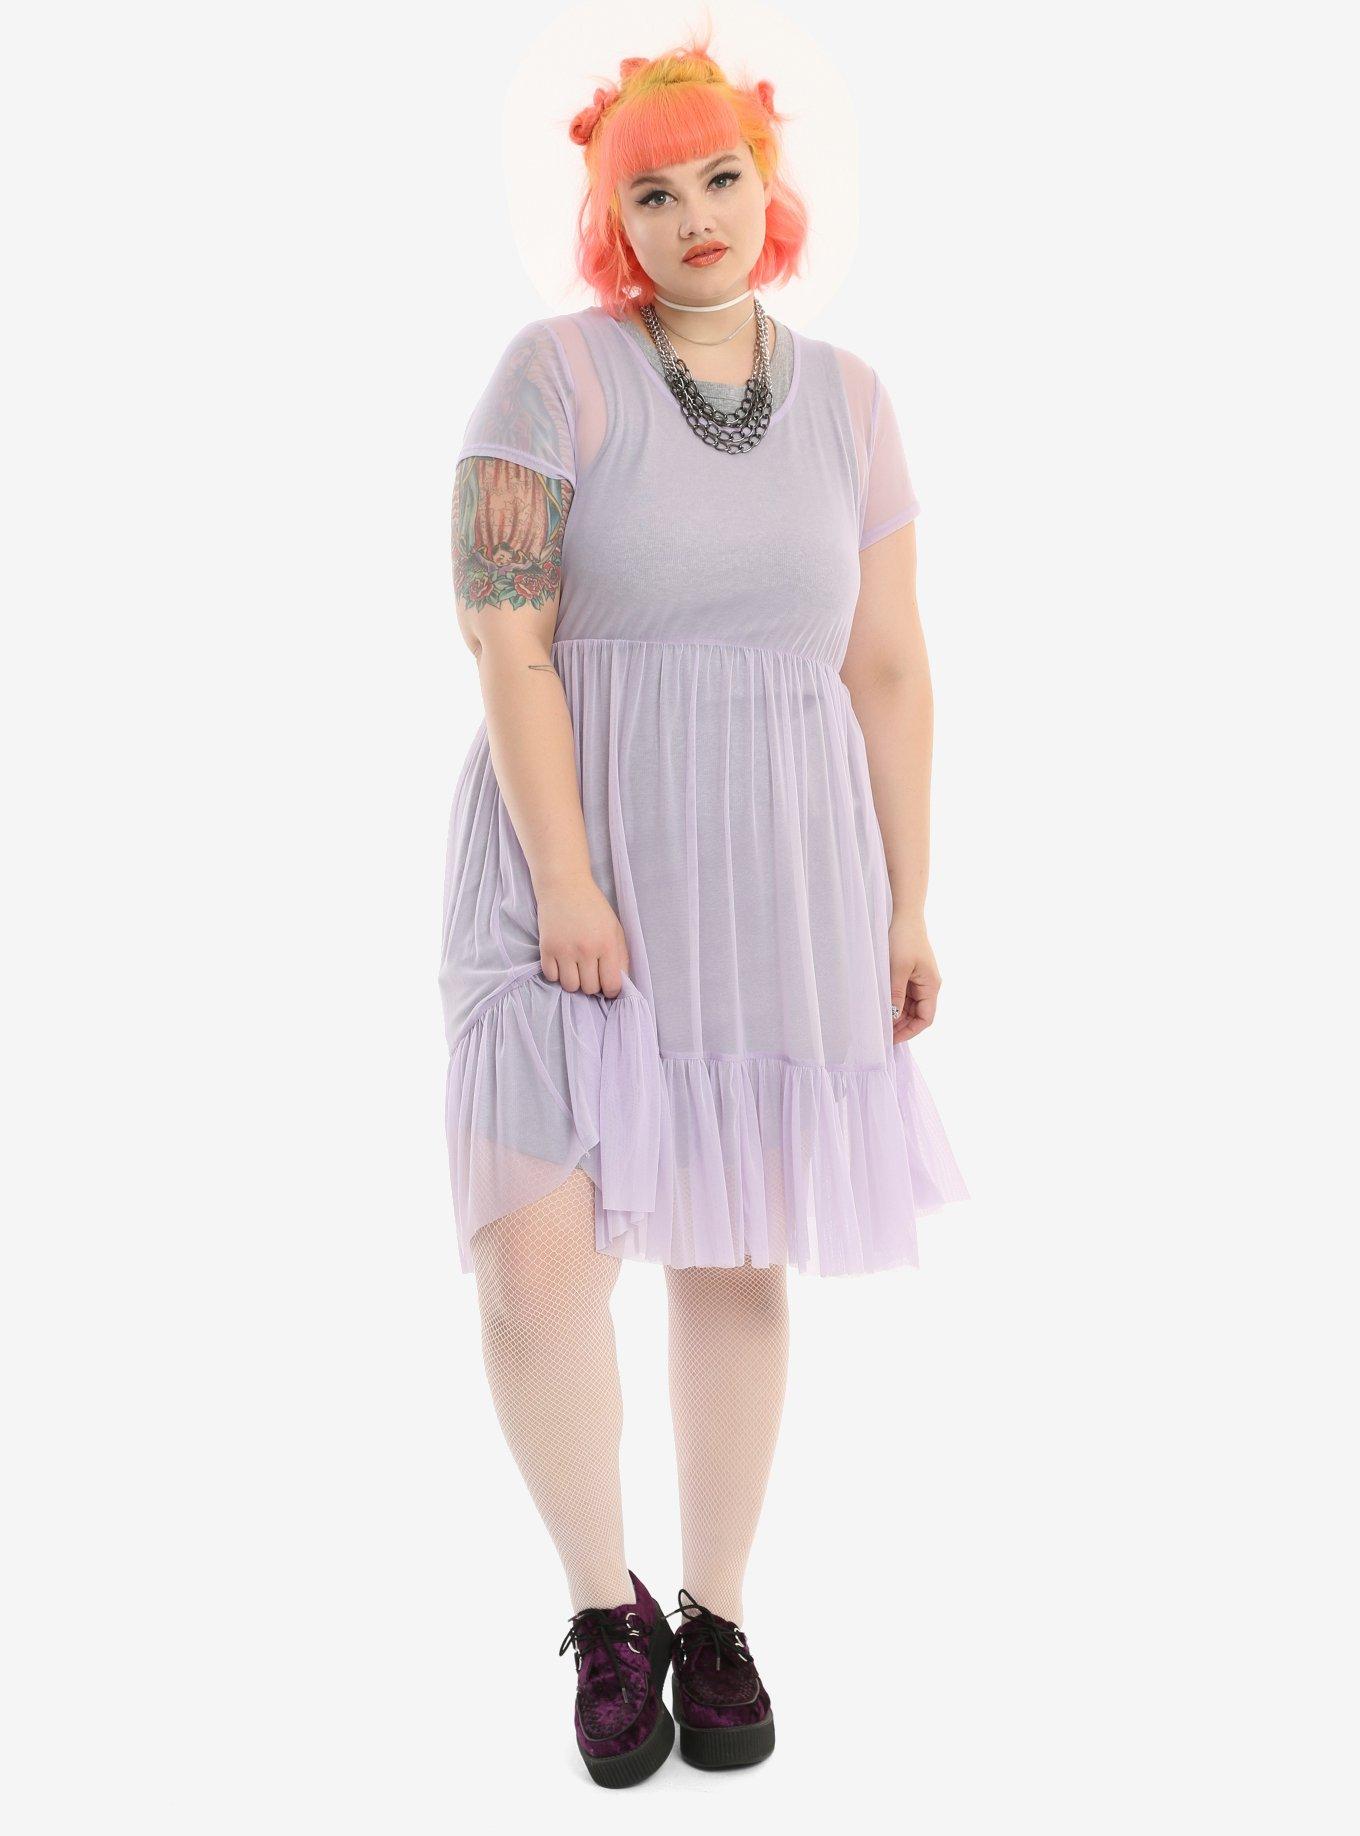 Lavender Mesh Babydoll Dress Plus Size, , alternate